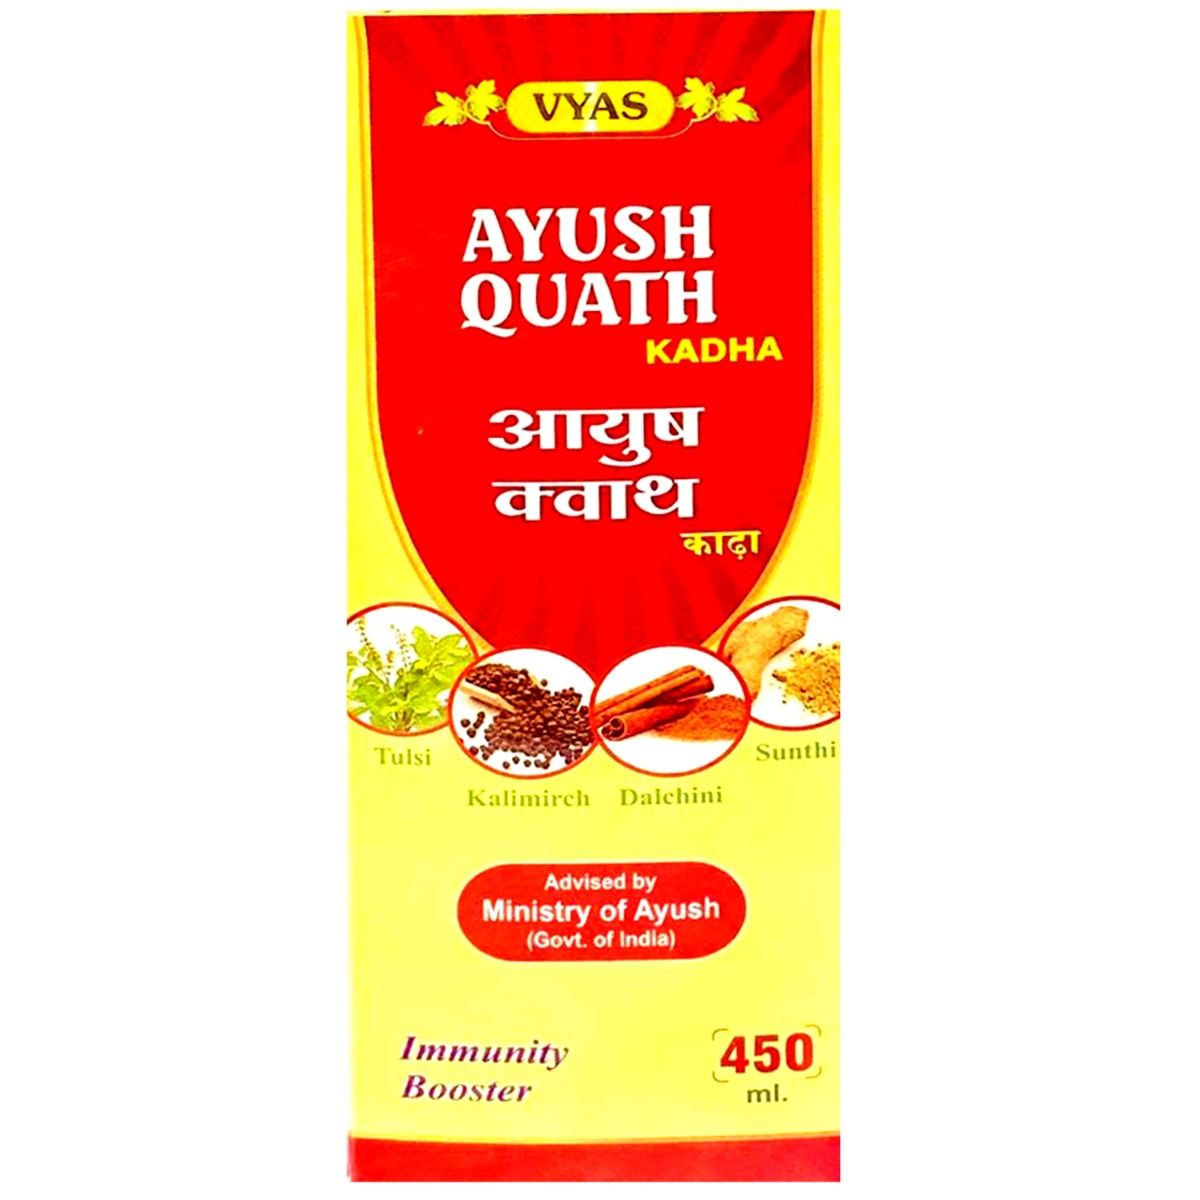 Vyas Ayush Quath Kadha, 450 ml, Pack of 1 